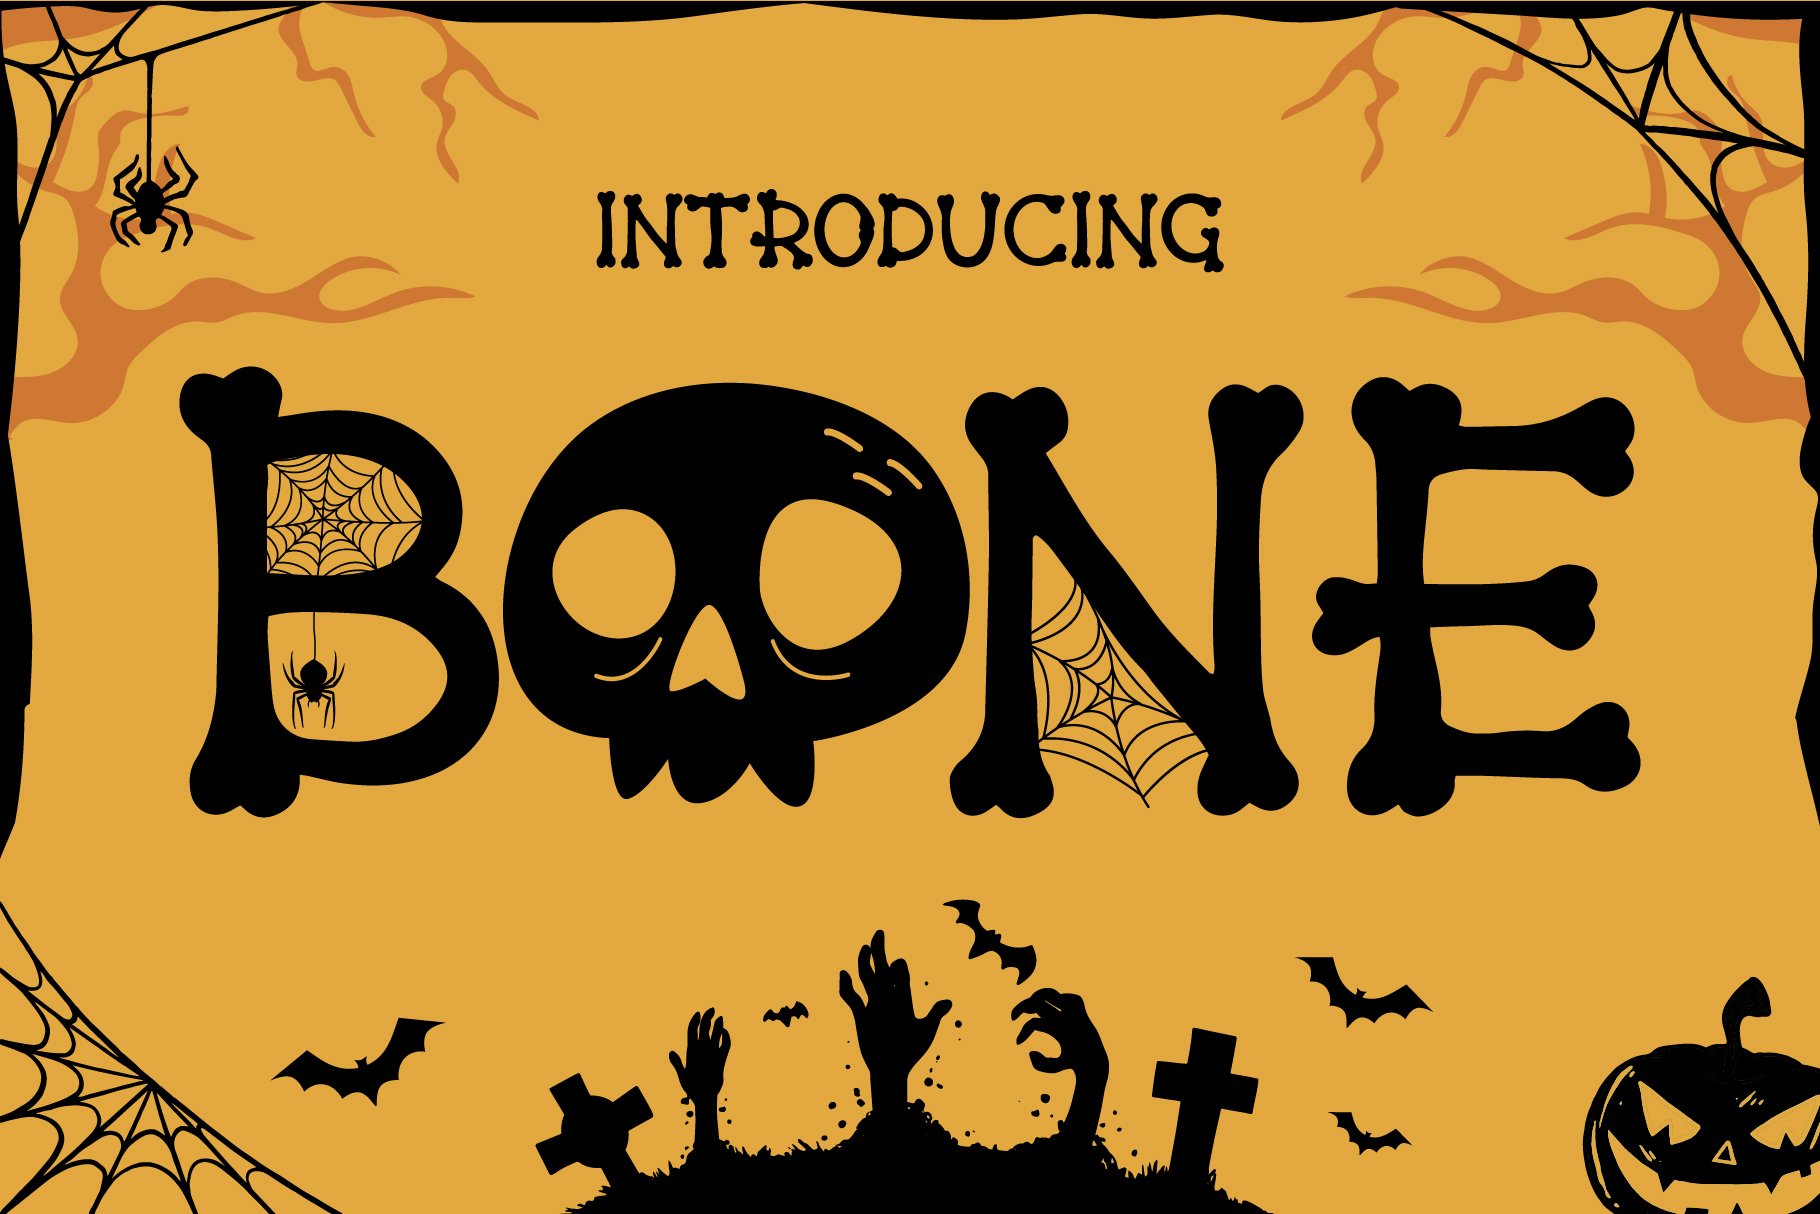 Bone Fonts cover image.